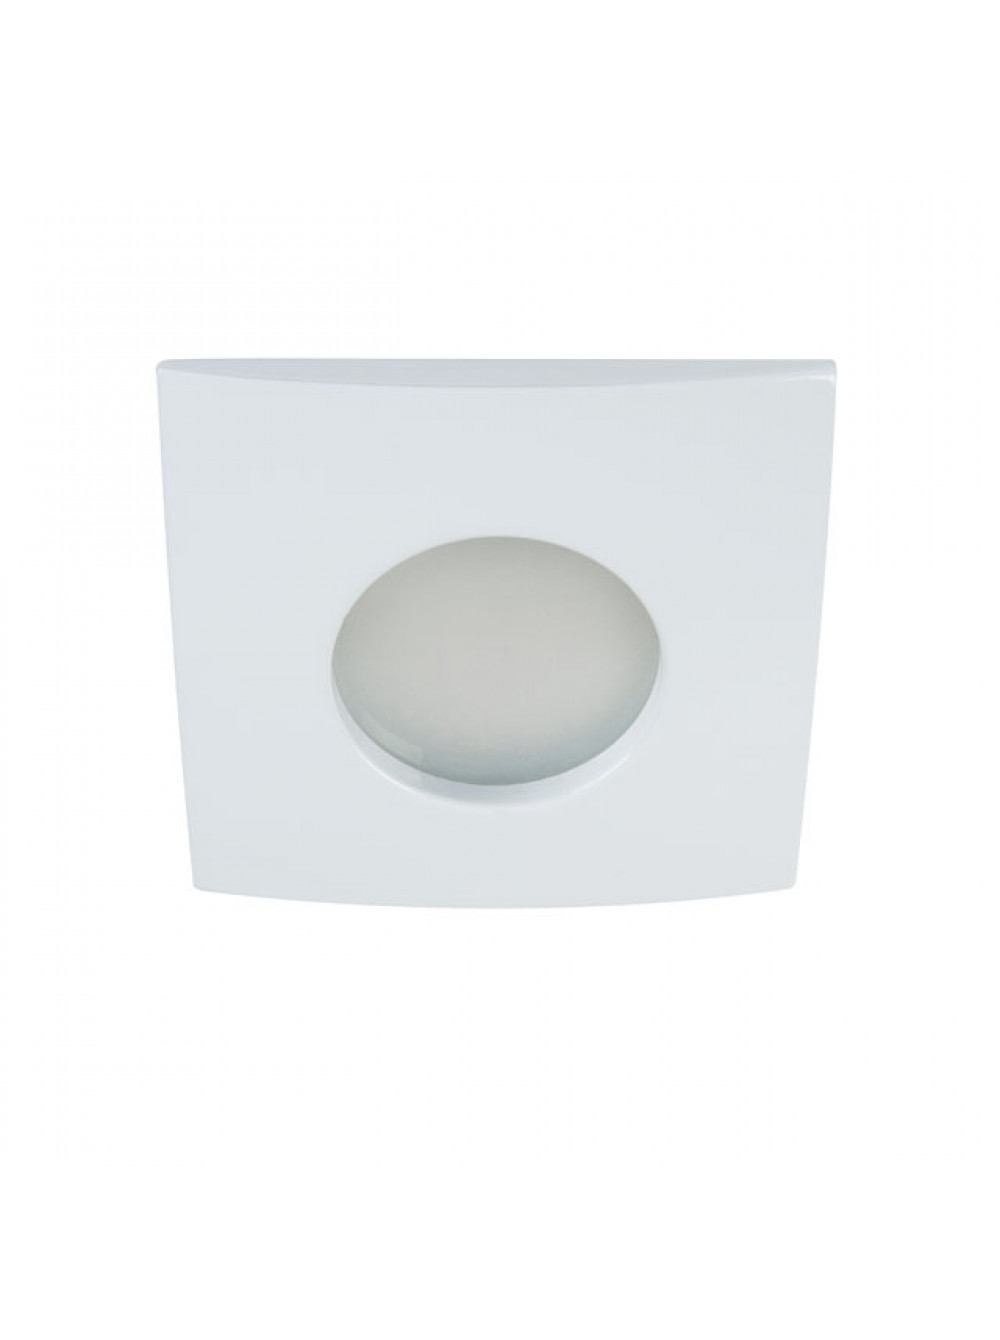 98295695 Светильник точечный для ванной комнаты QULES AC L-W GU10 STLM-0619933 KANLUX